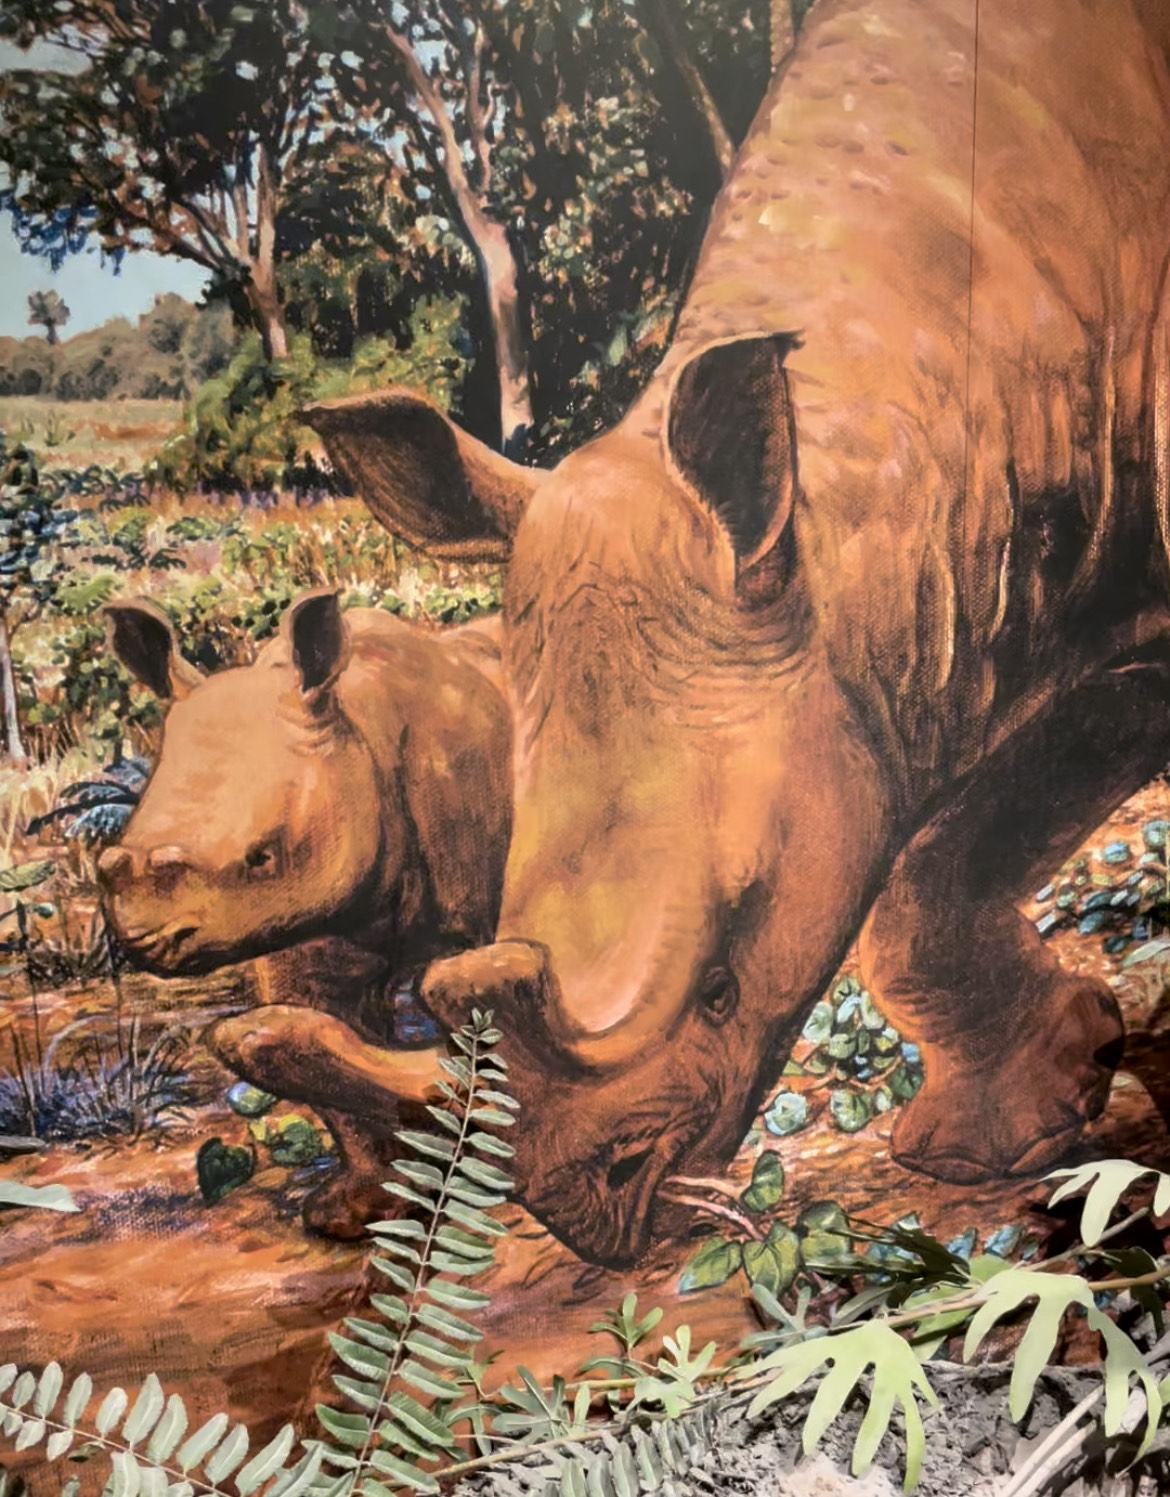 Artist's rendering of extinct Brontotheres